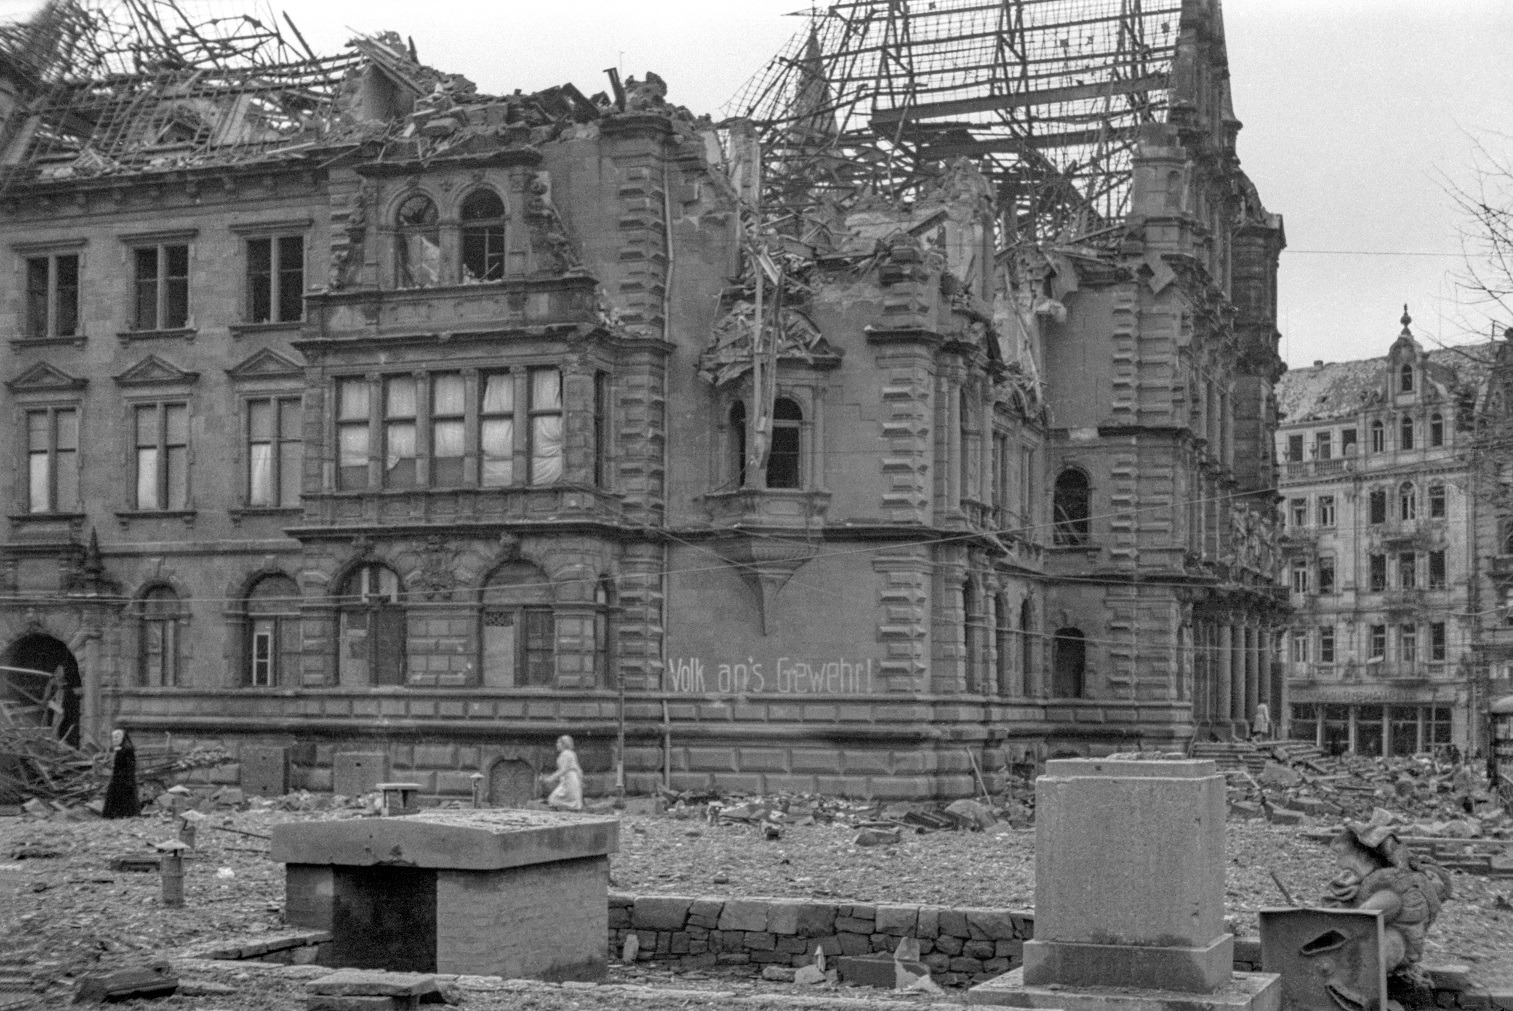 L'hôtel de ville de Wiesbaden endommagé en 1945. Photographe : Willi Rudolph. StadtA WI, collection Willi Rudolph